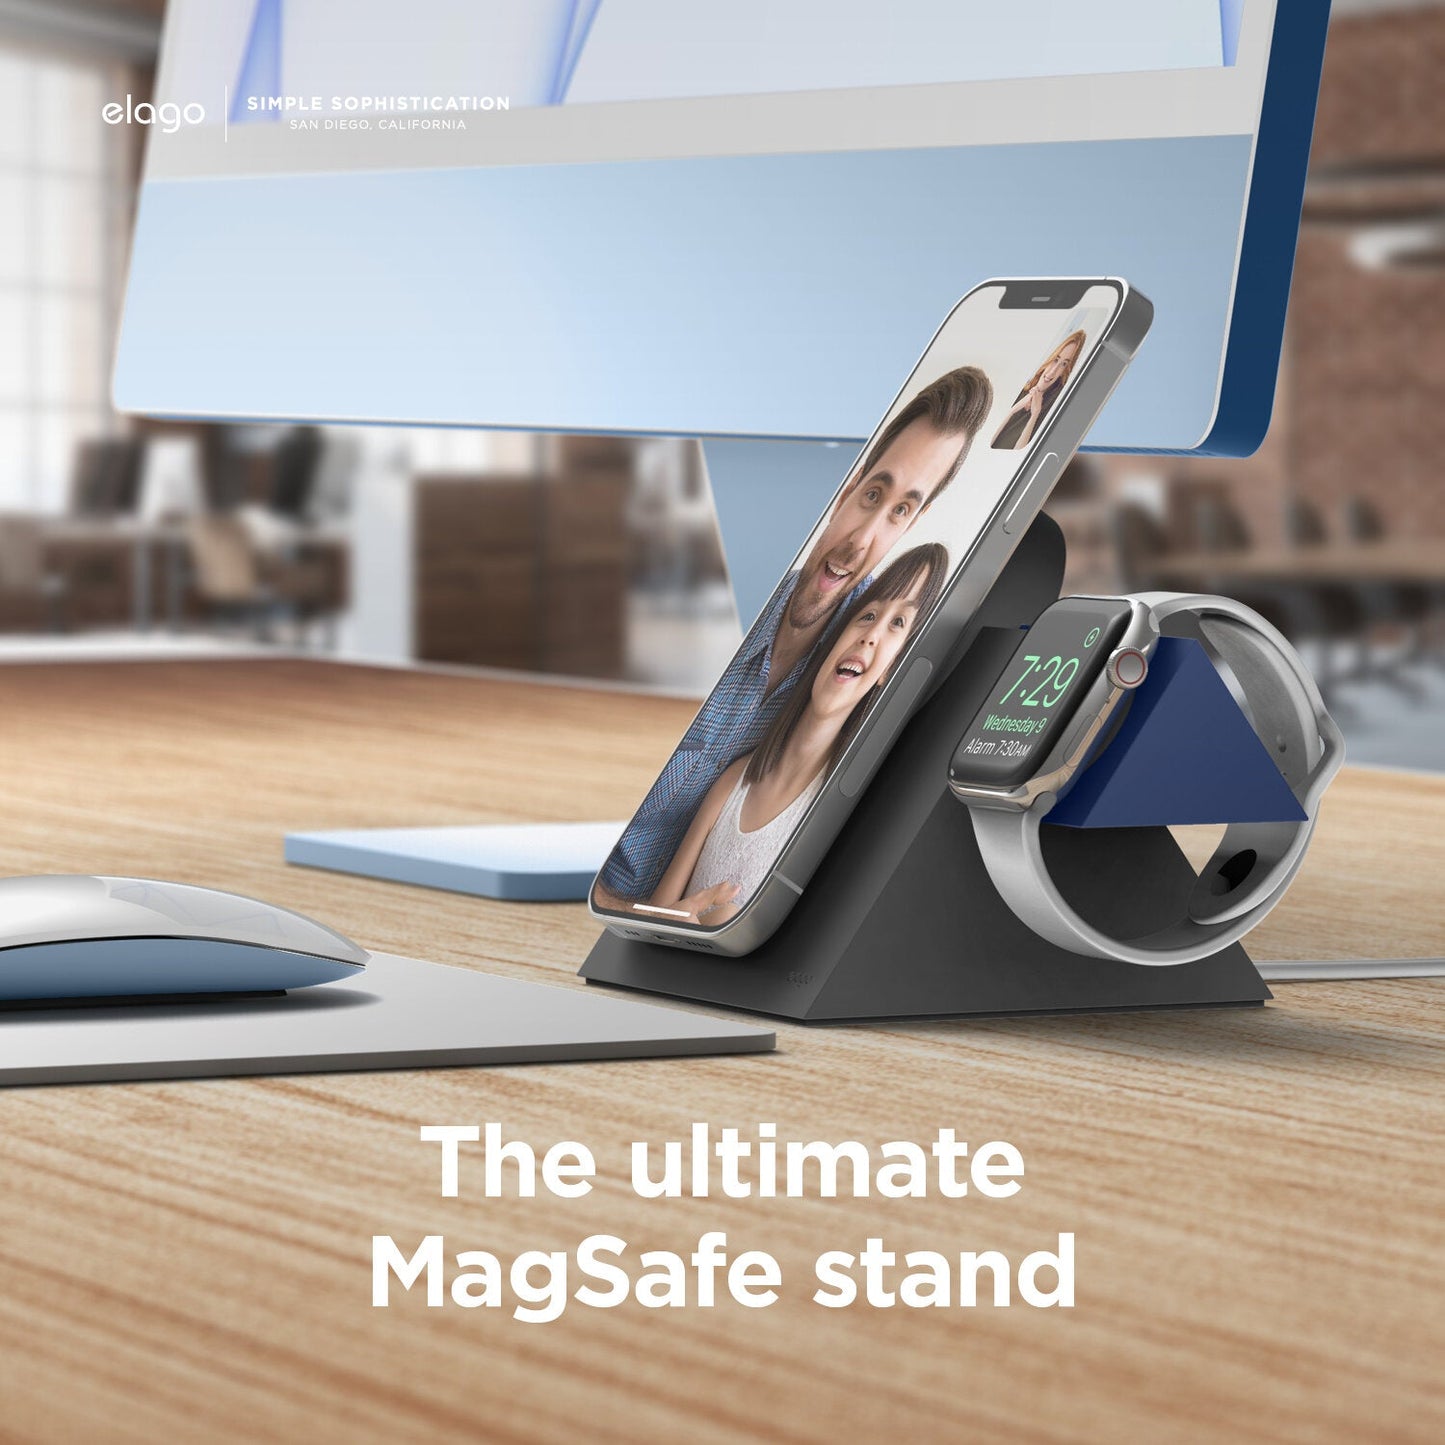 Elago MagSafe Charging MS5 Duo (متوافق مع شاحن ماج سيف وشاحن Apple Watch) - رمادي داكن / Jean Indigo - رمادي داكن / Jean Indigo